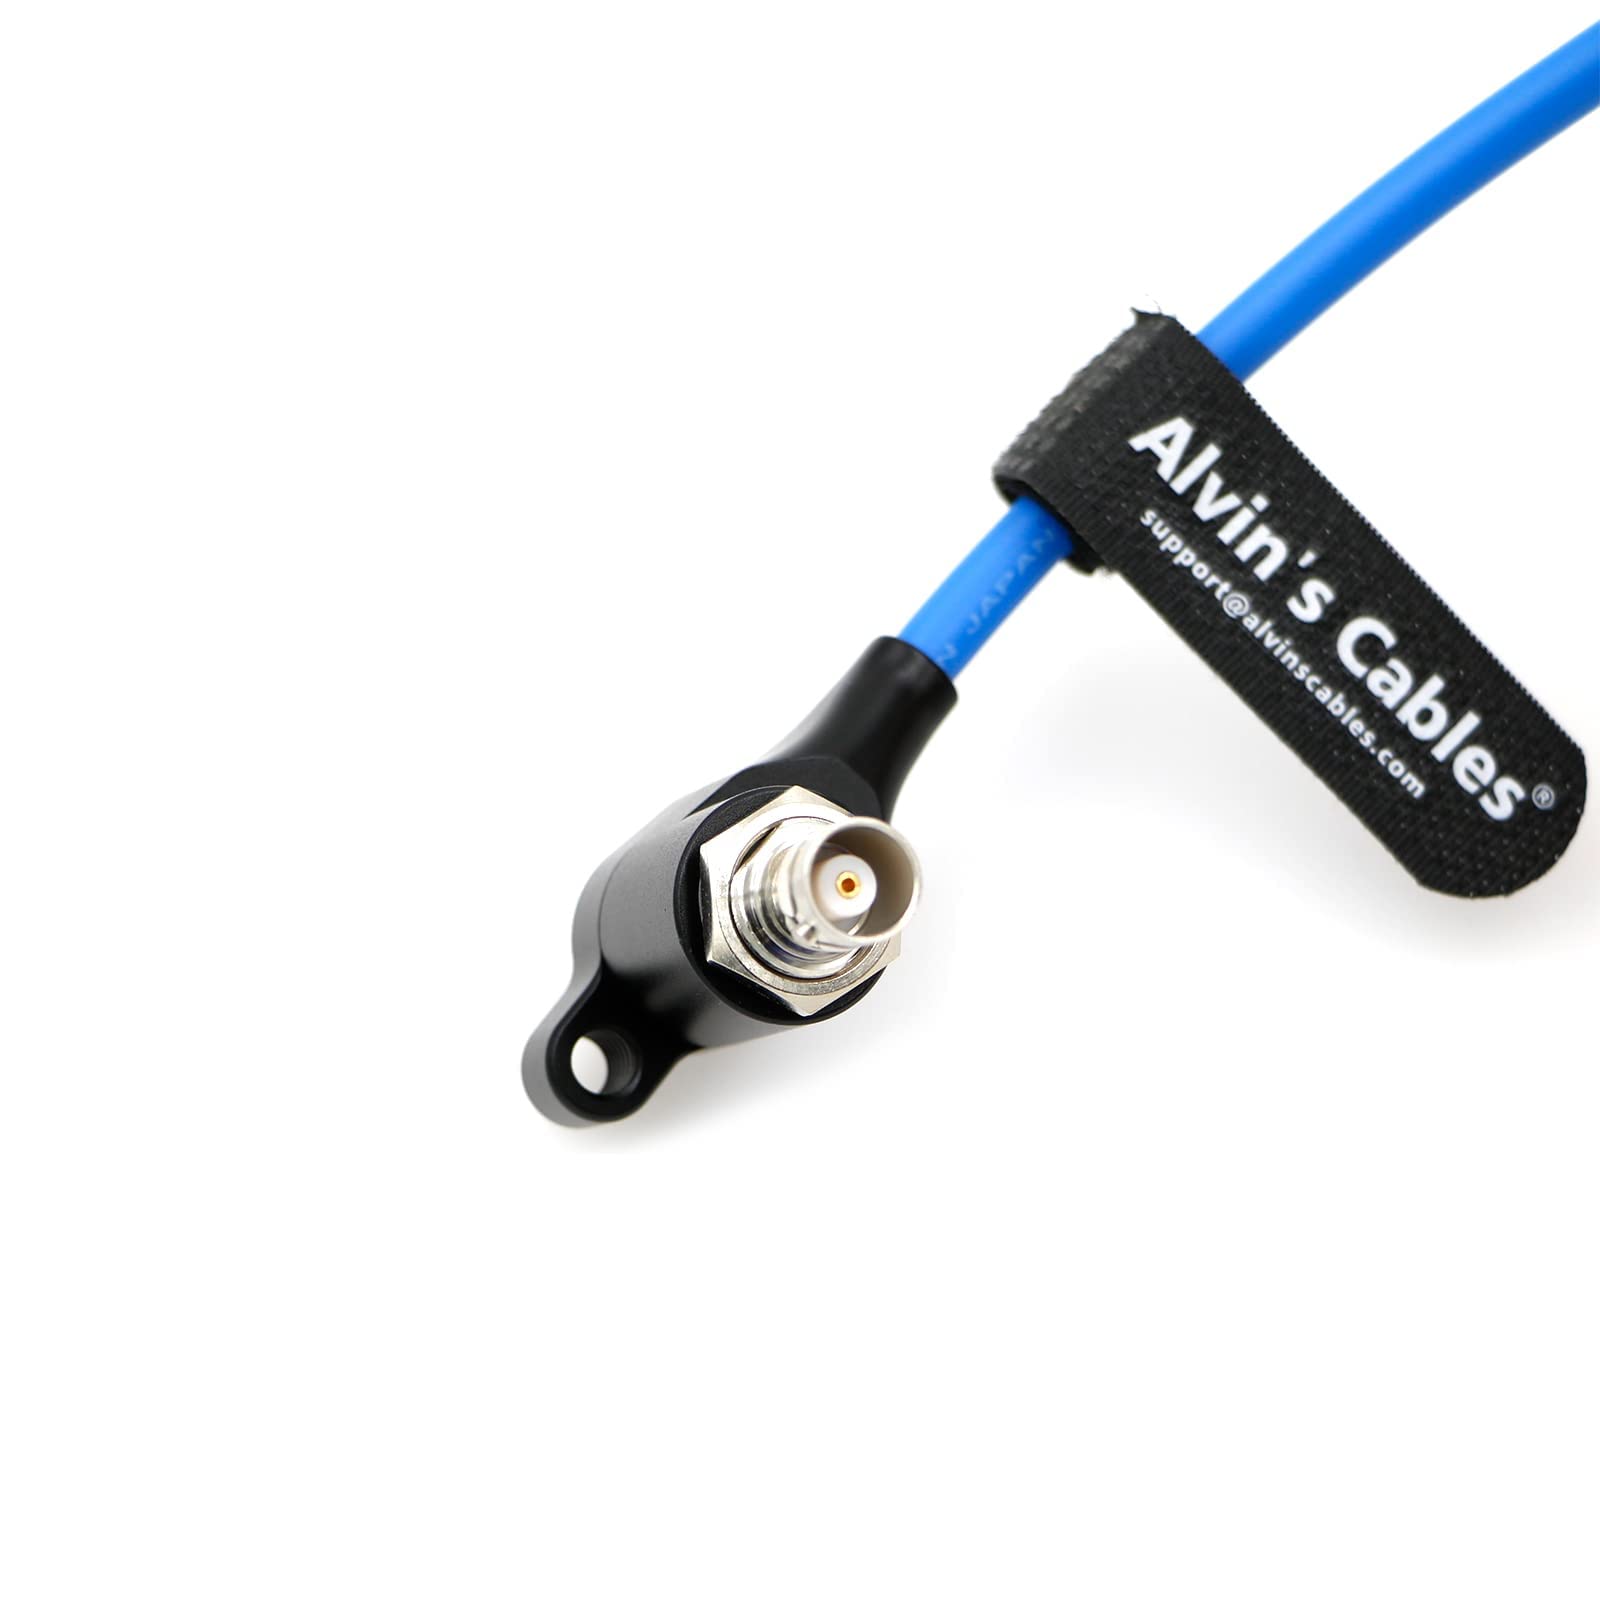 SDI-Protector for RED-Komodo SDI-Port-Protection-Cable Galvanic-Isolators BNC Male to Female Cord 8Inch|20CM Alvin’s Cables